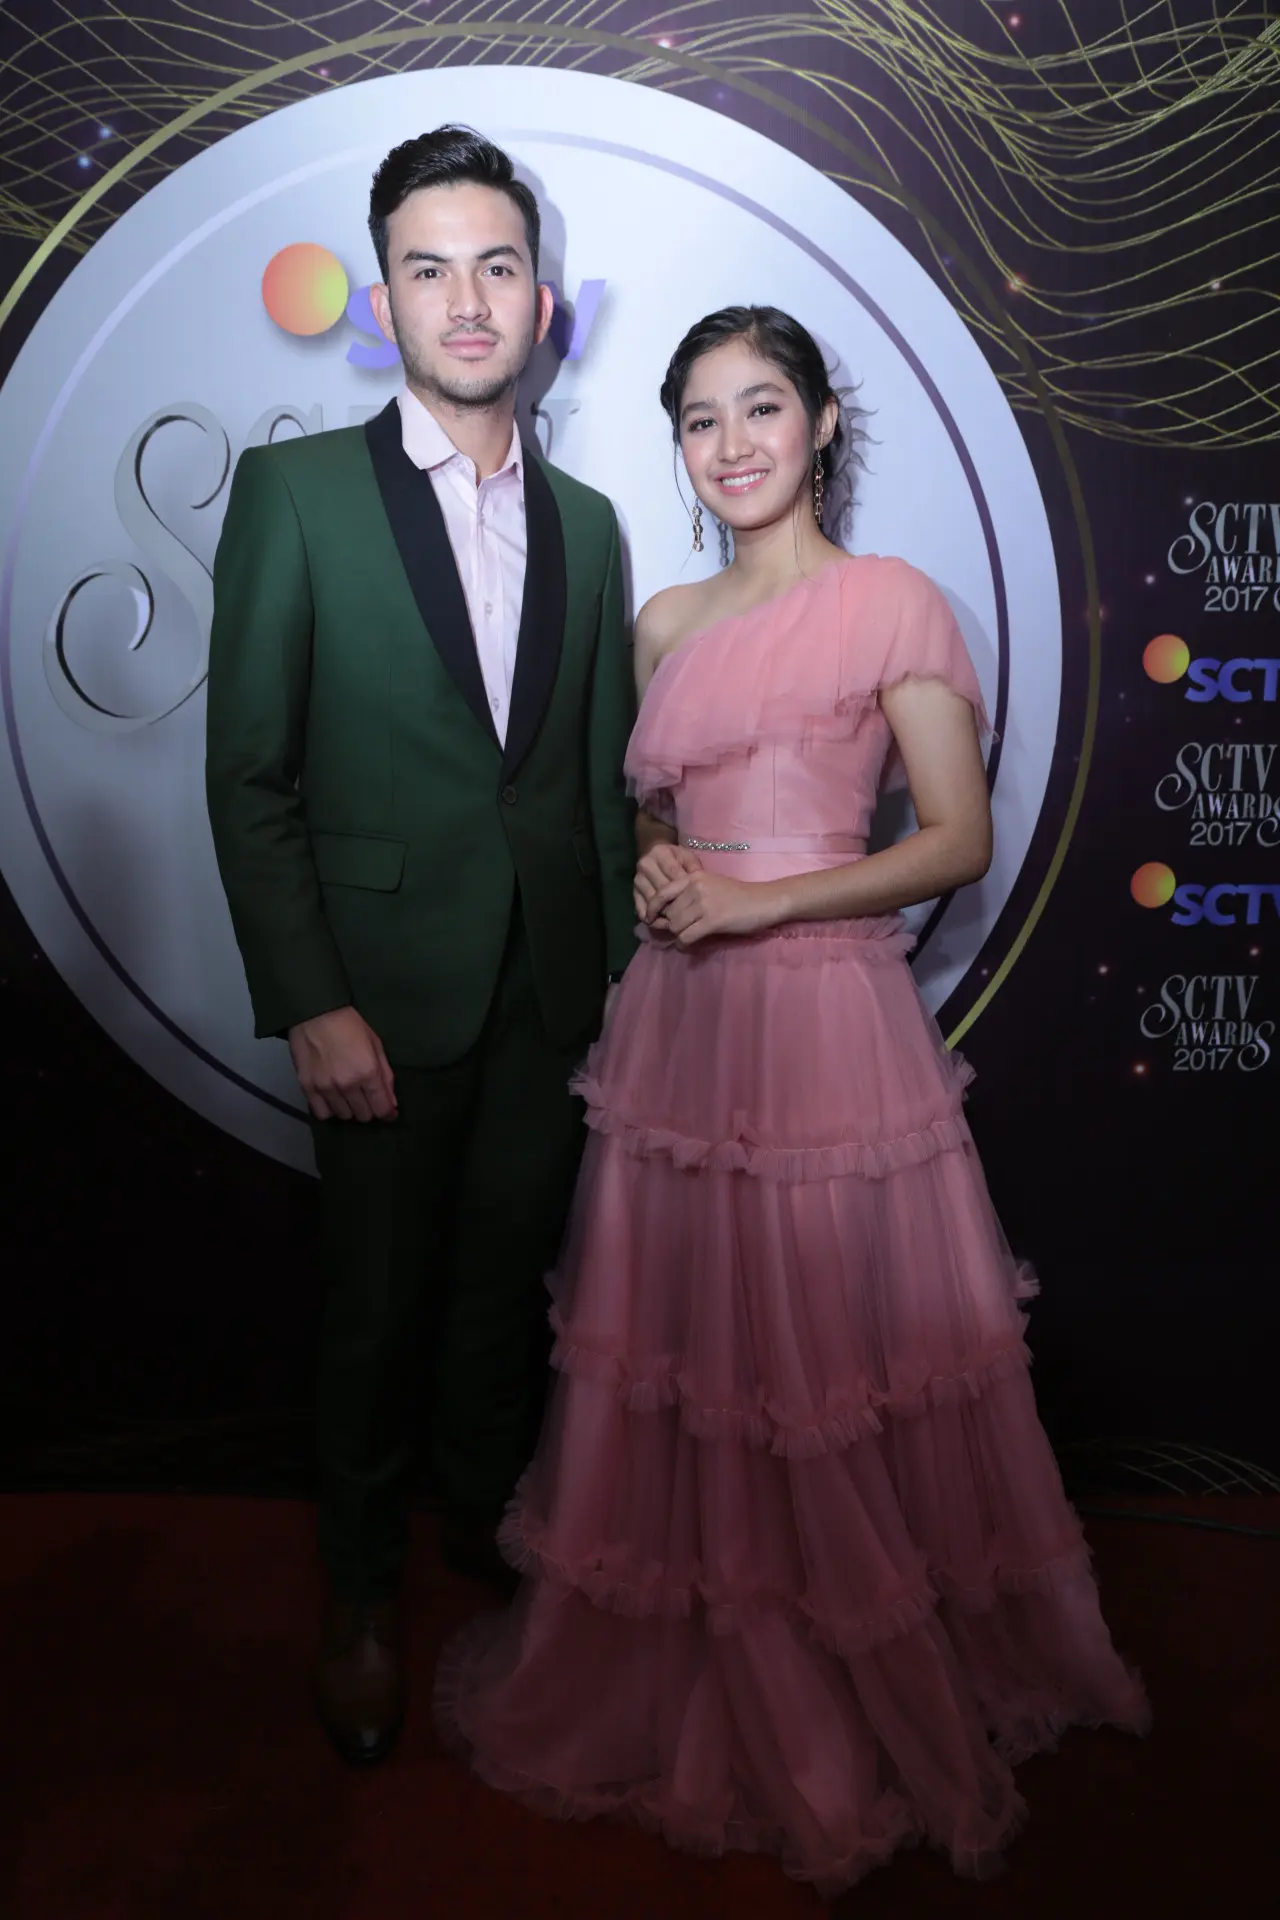  Cut Syifa - Rizky Nazar di SCTV Awards 2017 (Adrian Putra/bintang.com)